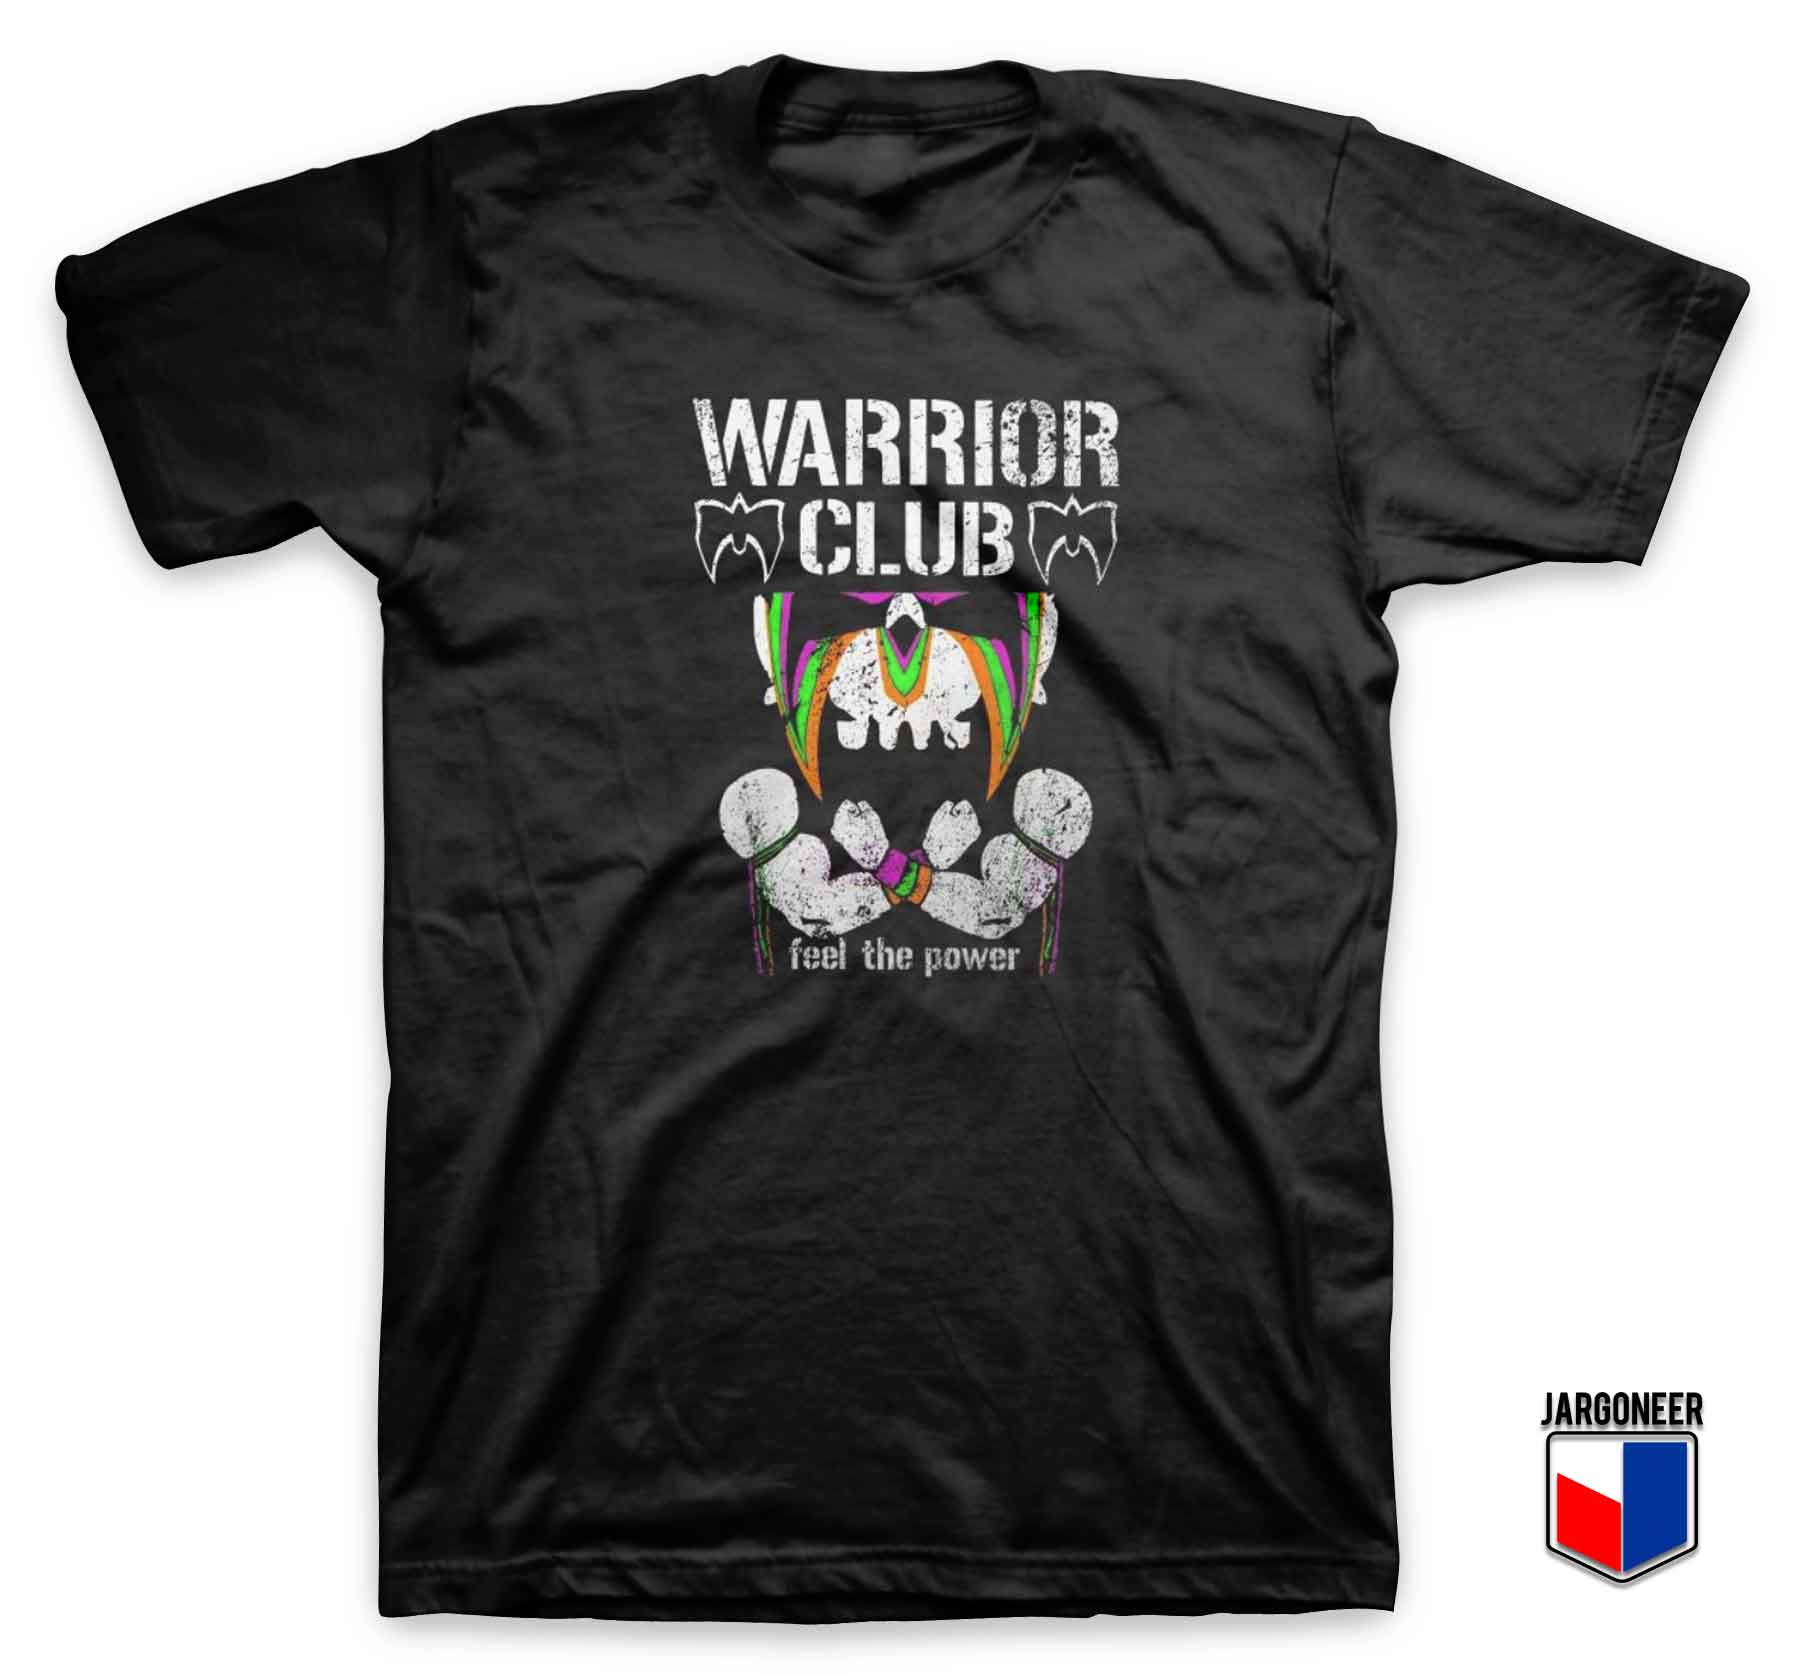 Warrior Club - Shop Unique Graphic Cool Shirt Designs